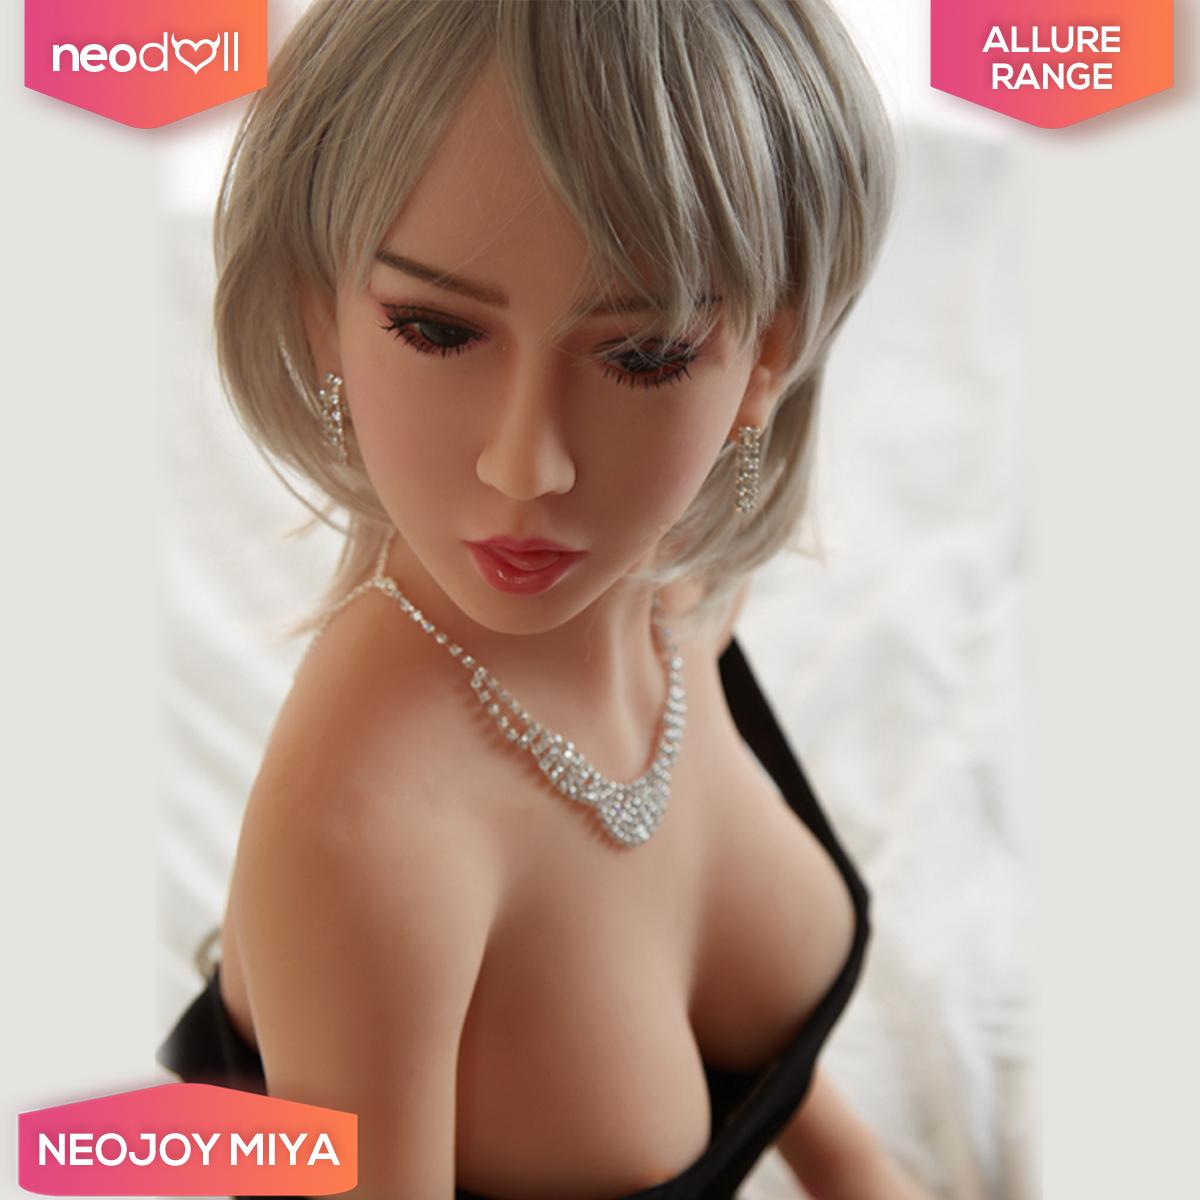 Neodoll Allure Miya - Realistic Sex Doll - 169cm - Natural